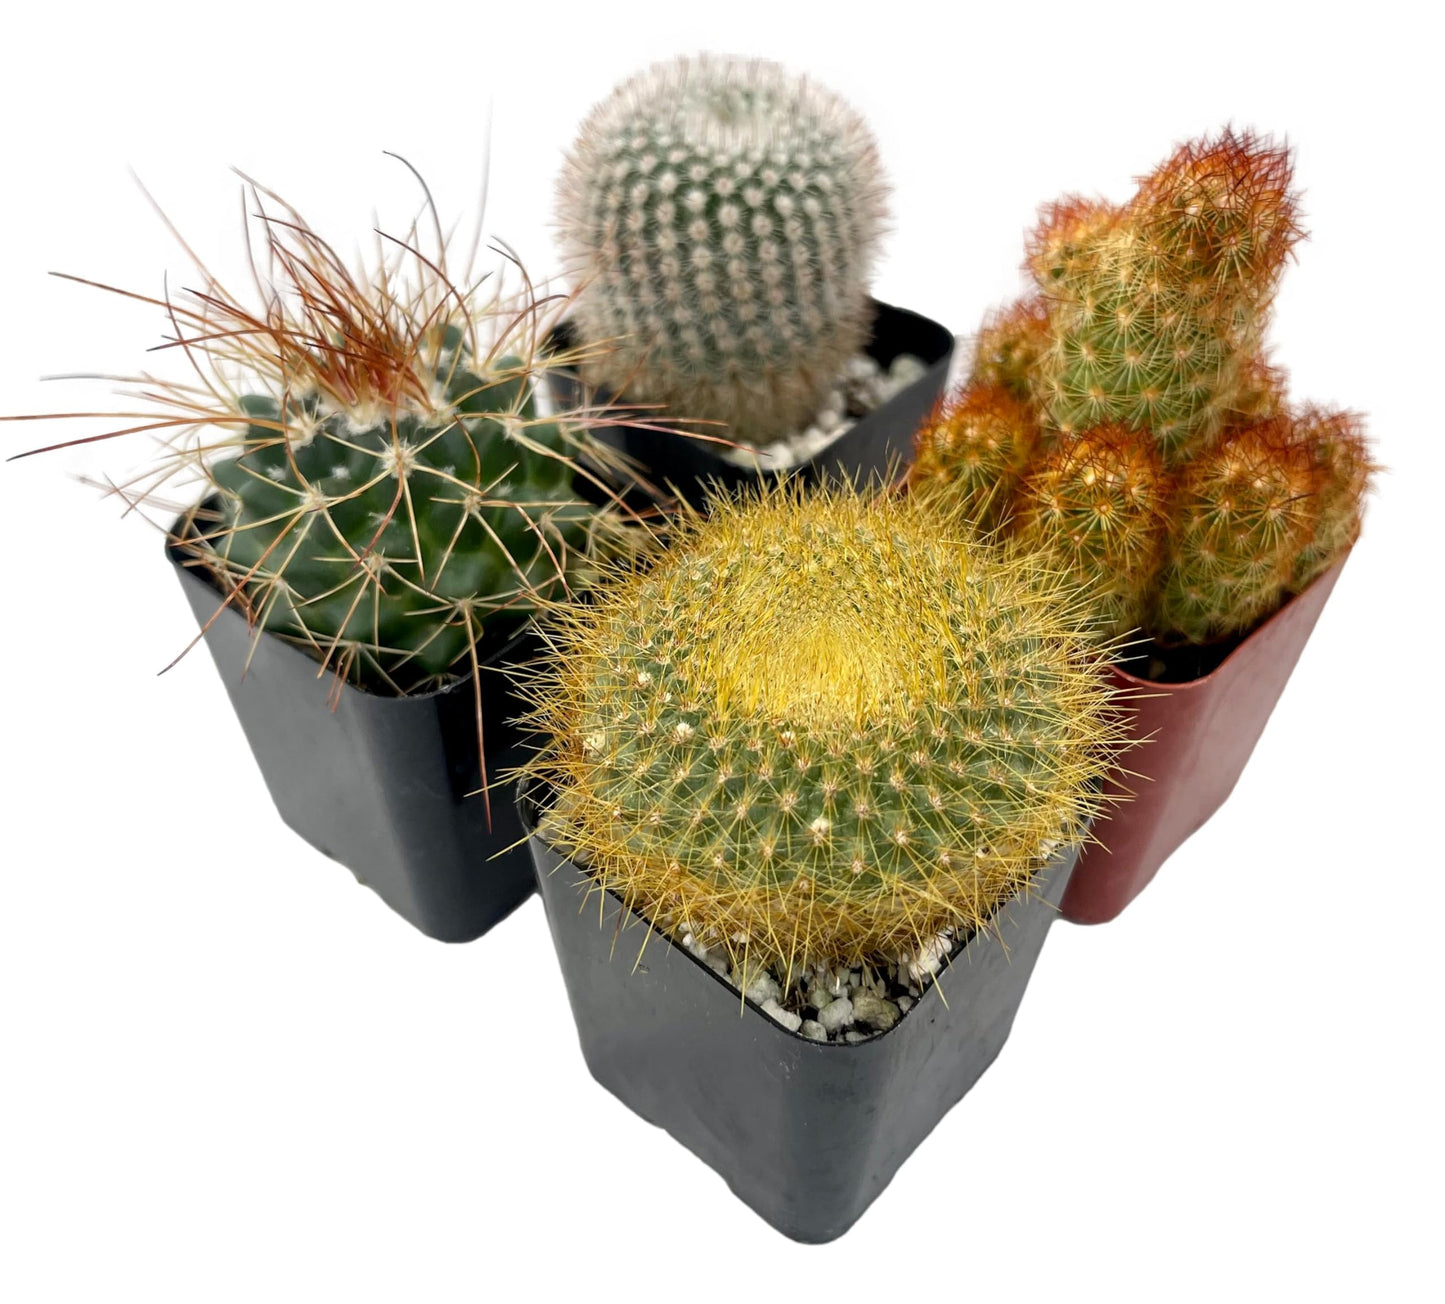 Fatplants Mini Cactus Plants Live Plants (4 Pack), Cactus Plant Indoor Live Plants, Cacti Plants Live Cactus Decor, Succulents Plants Live Houseplants, Mini Cactus Gifts in Cactus Soil Potting Mix